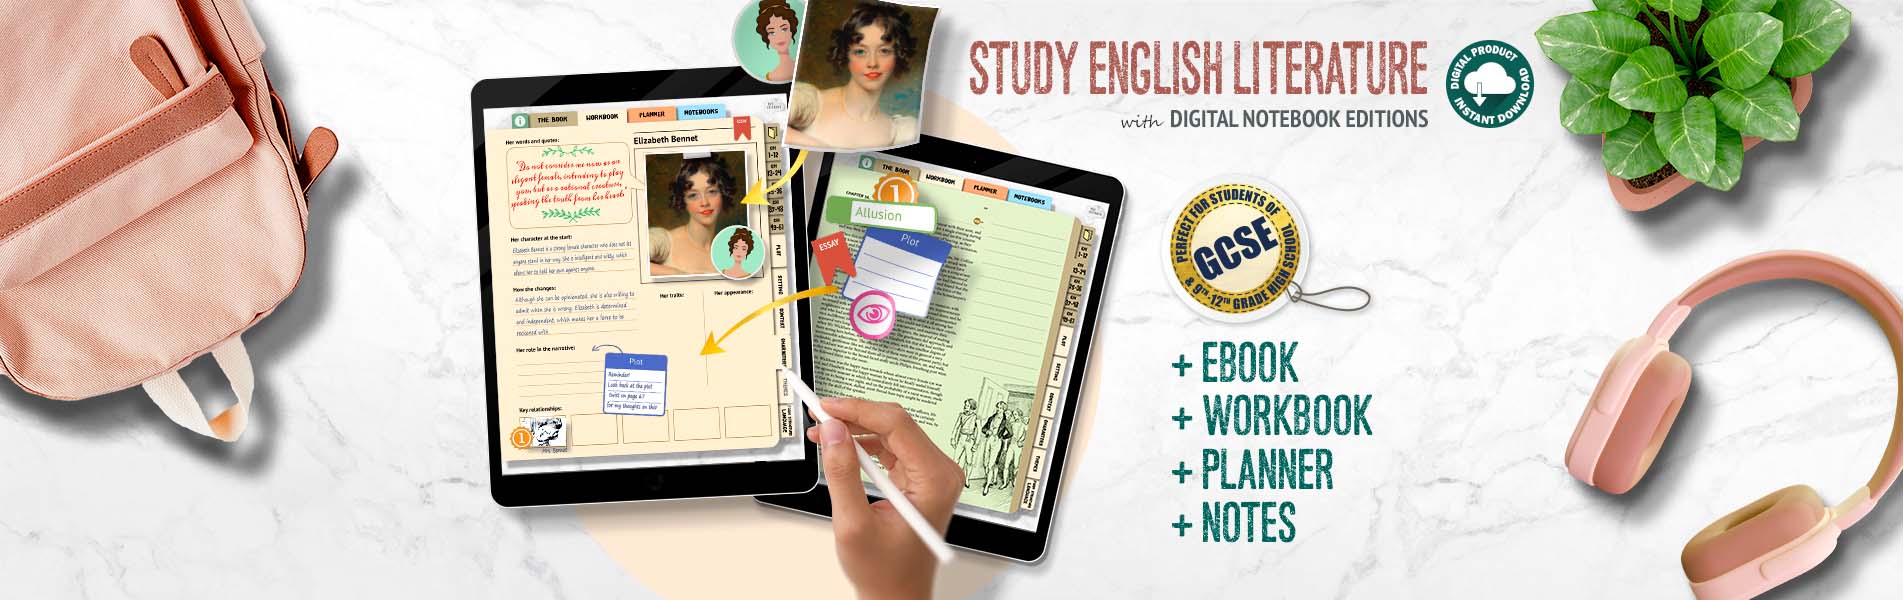 English Literature Digital Notebooks